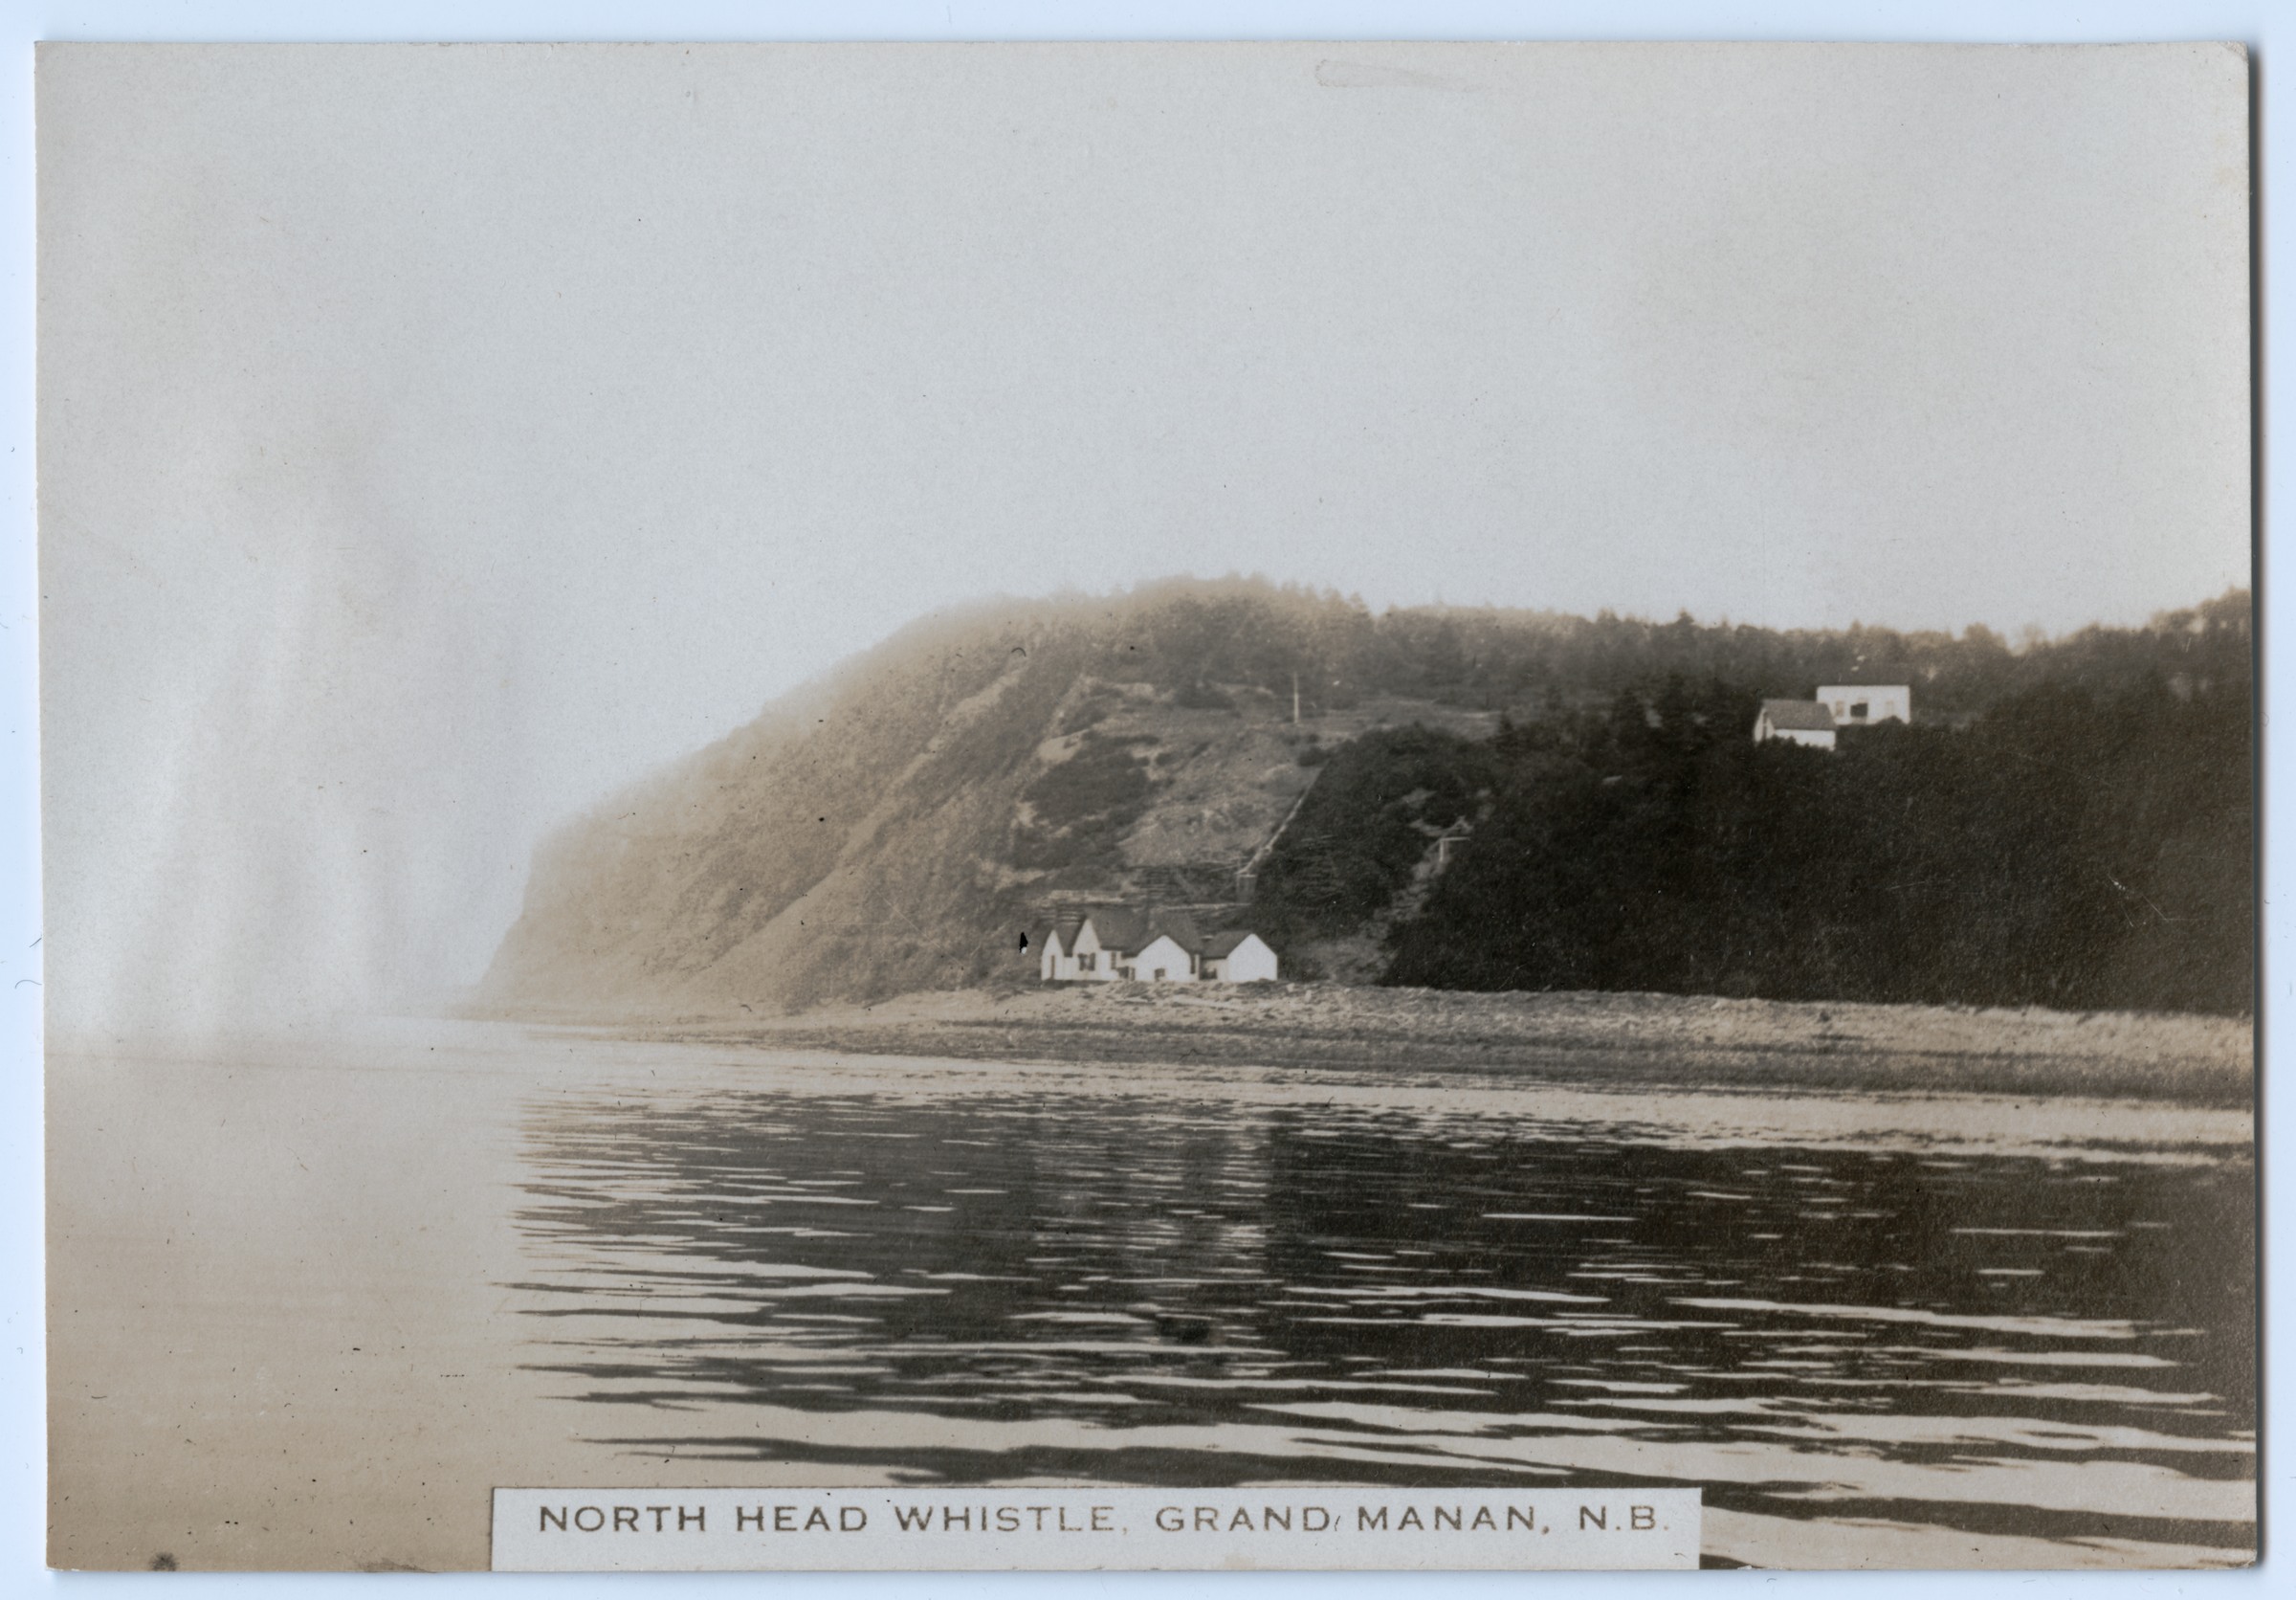 North Head Whistle, Grand Manan, N.B.